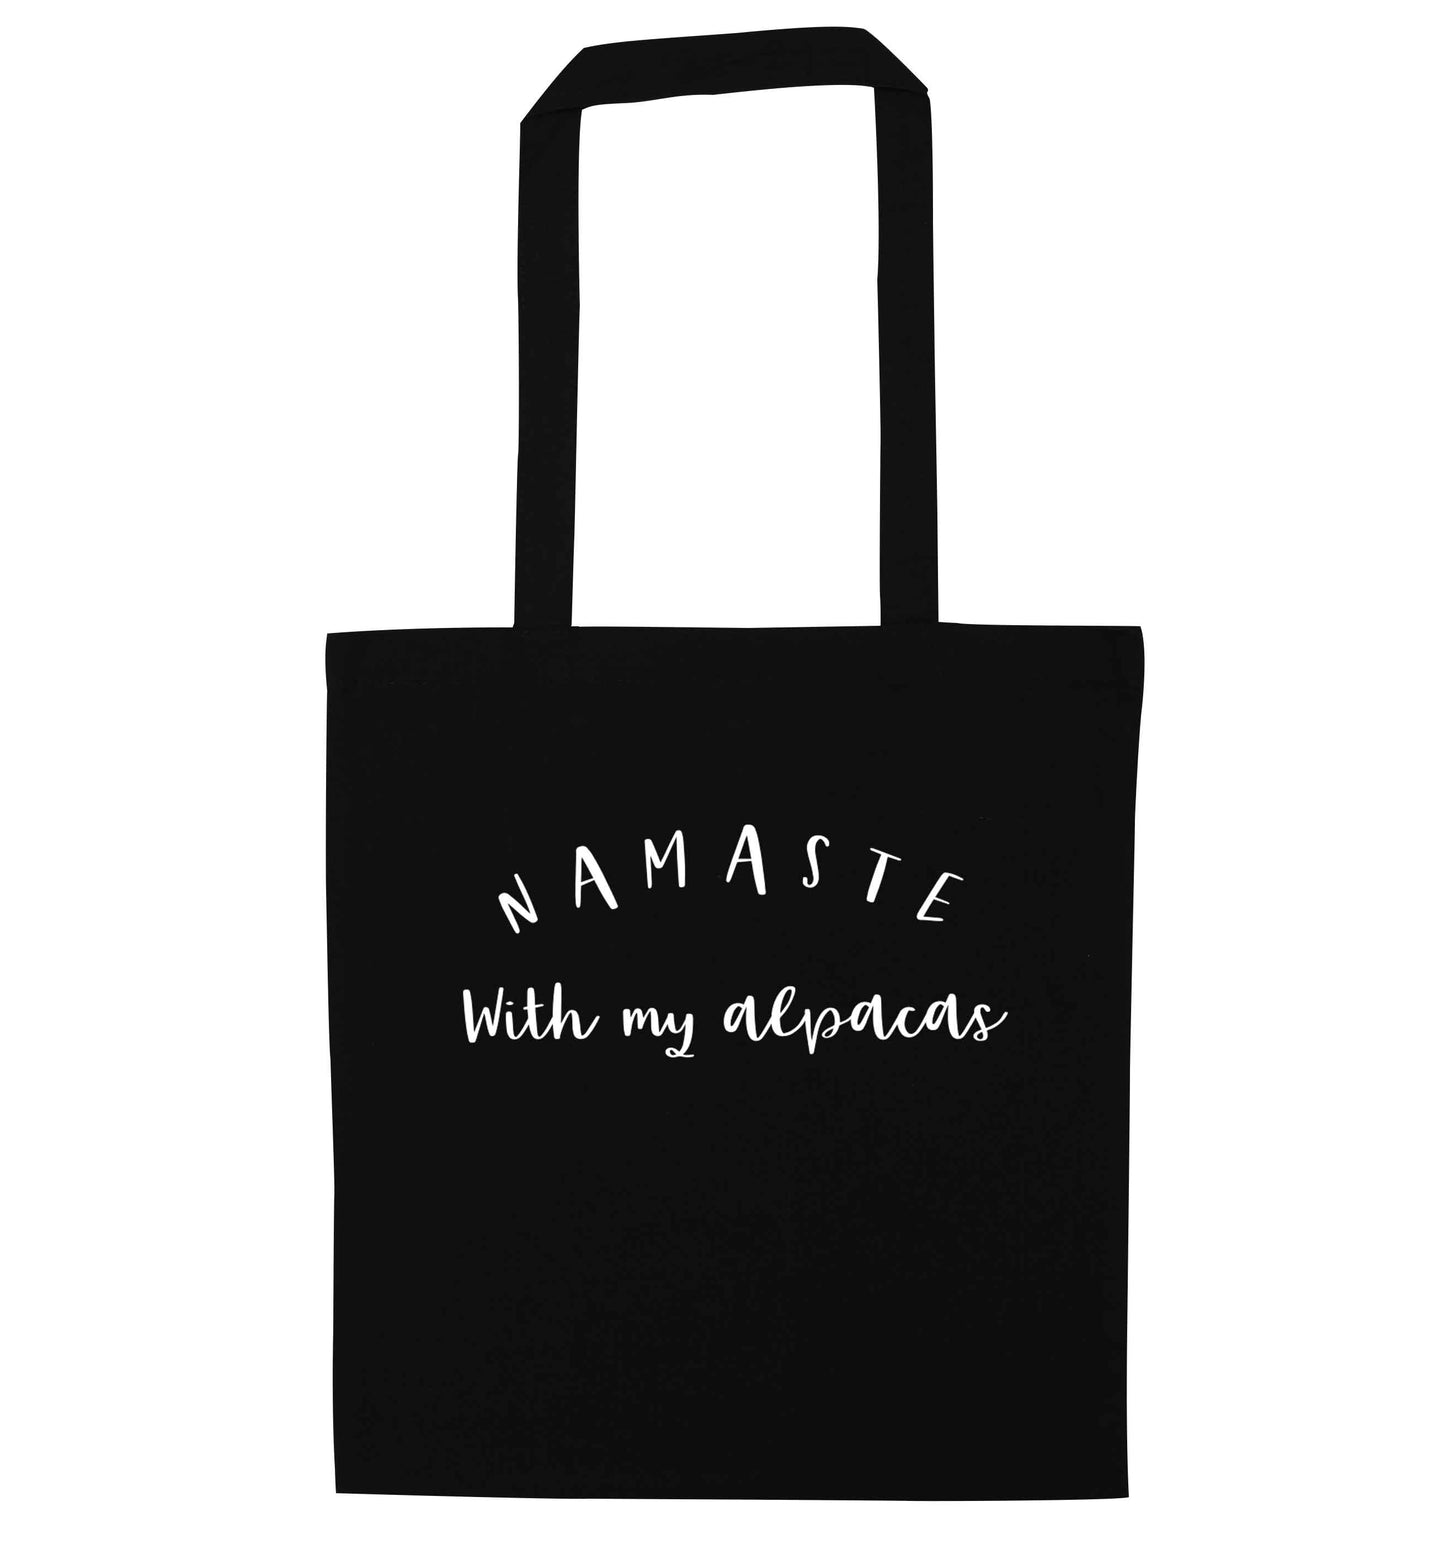 Namaste with my alpacas black tote bag